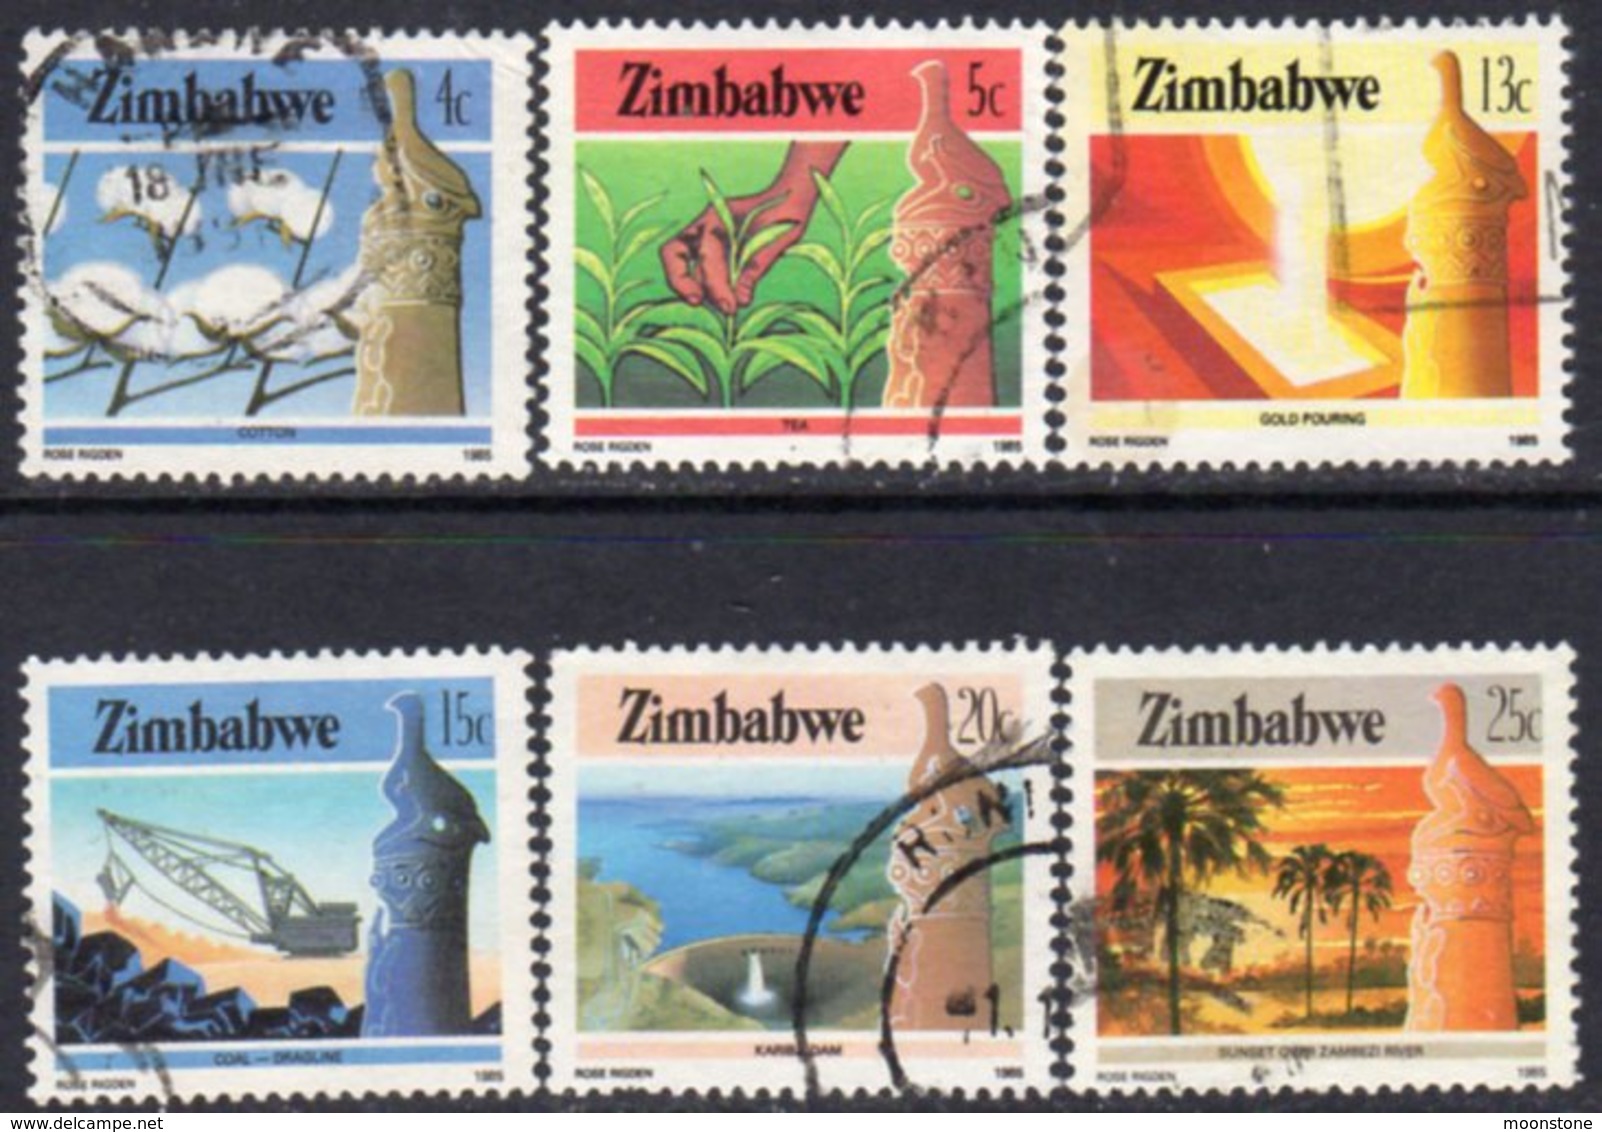 Zimbabwe 1985-8 Definitives Perf. 14 Values Part Set Of 6, Used, Between SG 661a/72a (BA2) - Zimbabwe (1980-...)